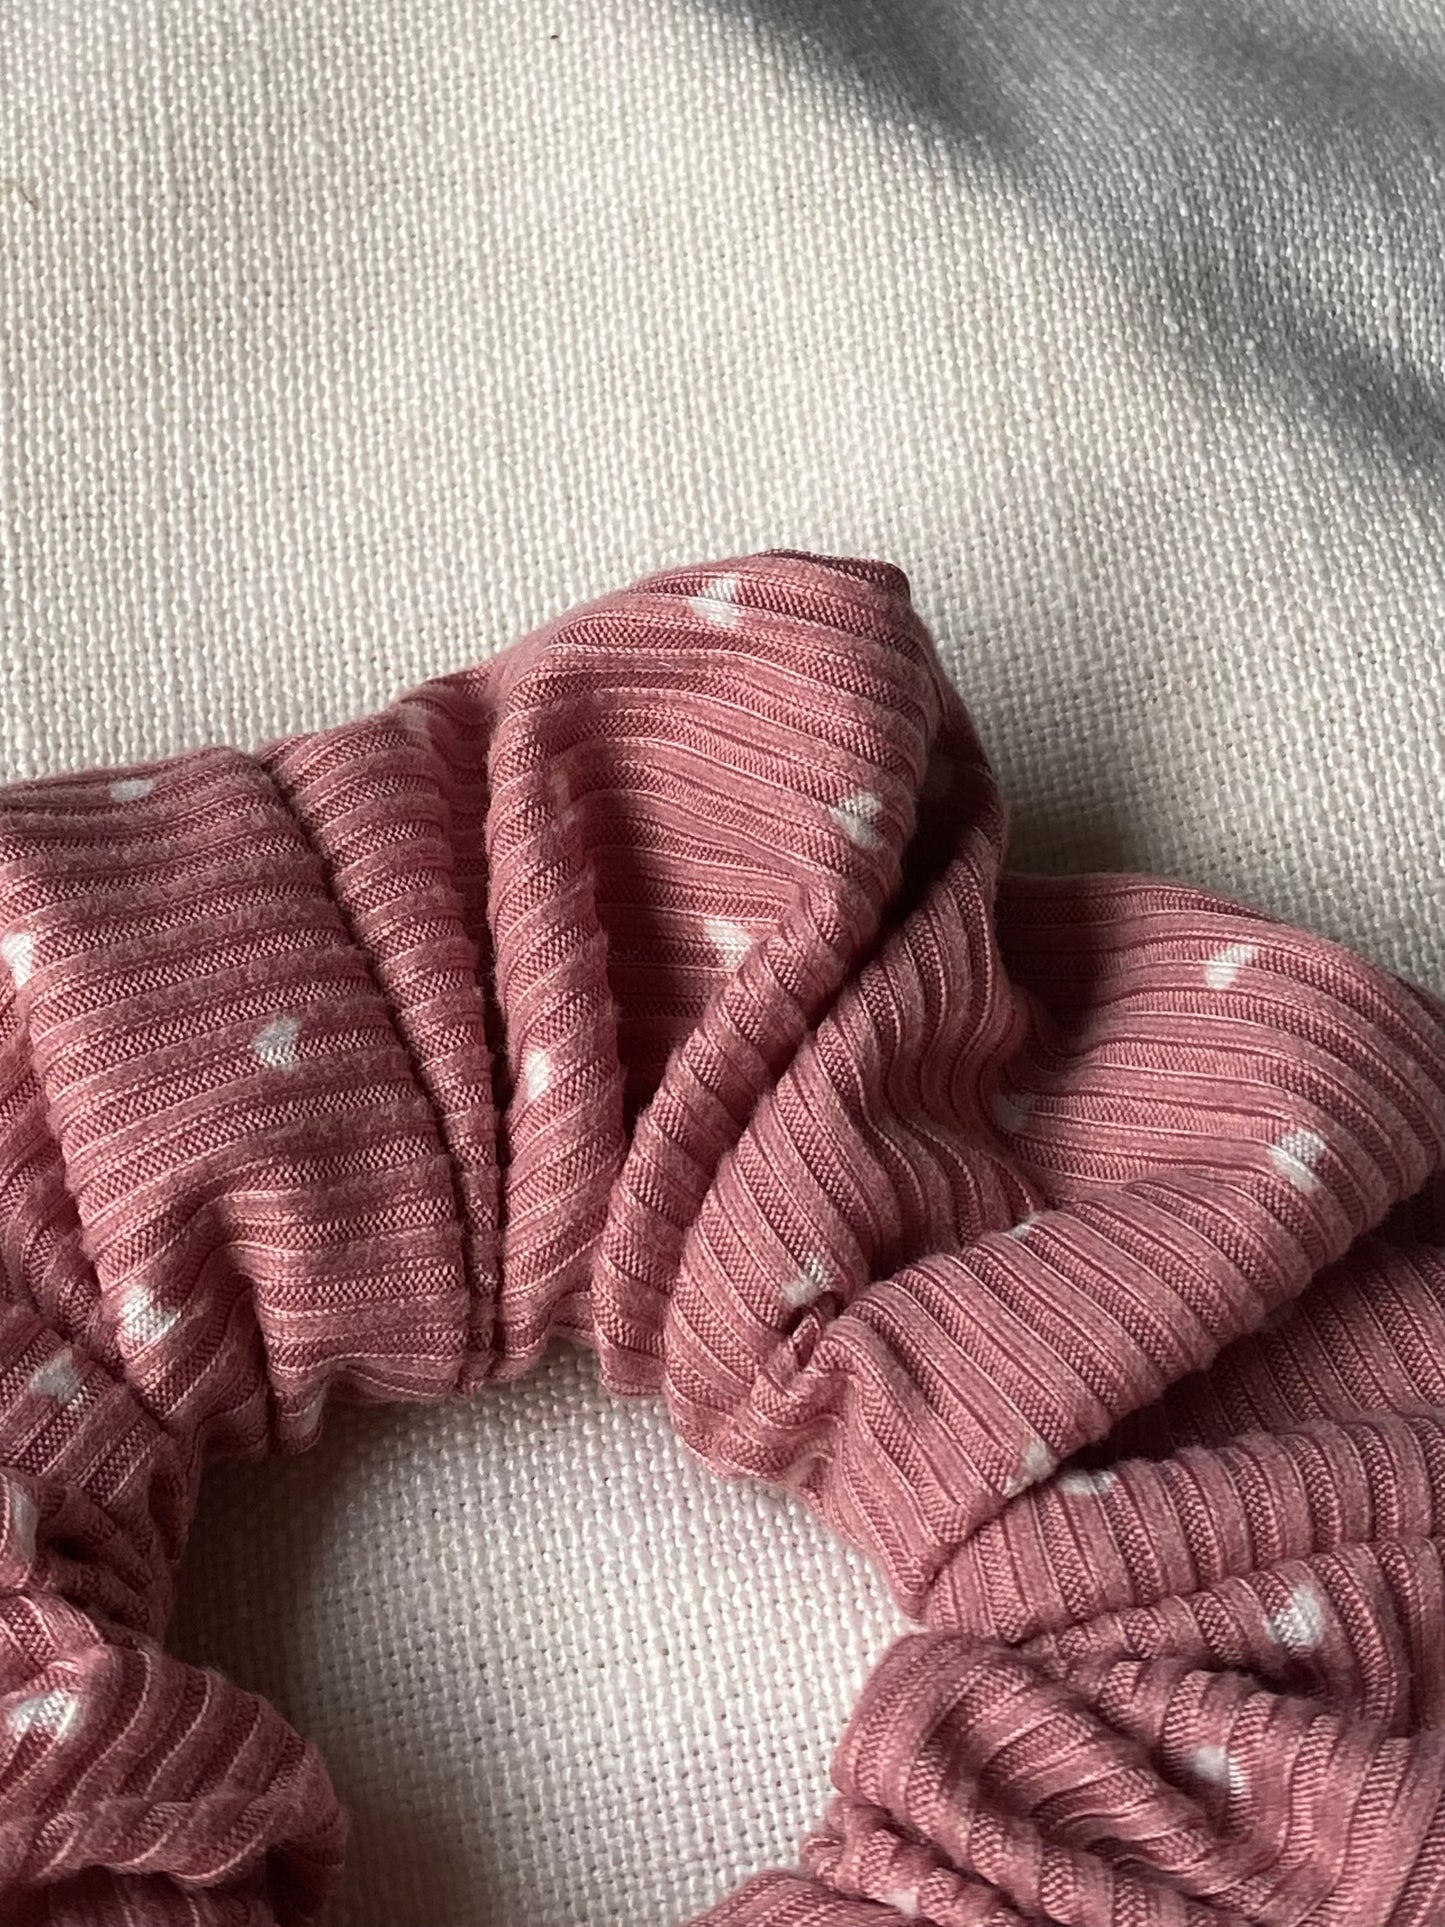 Pink Ribbed Mini Heart Scrunchie